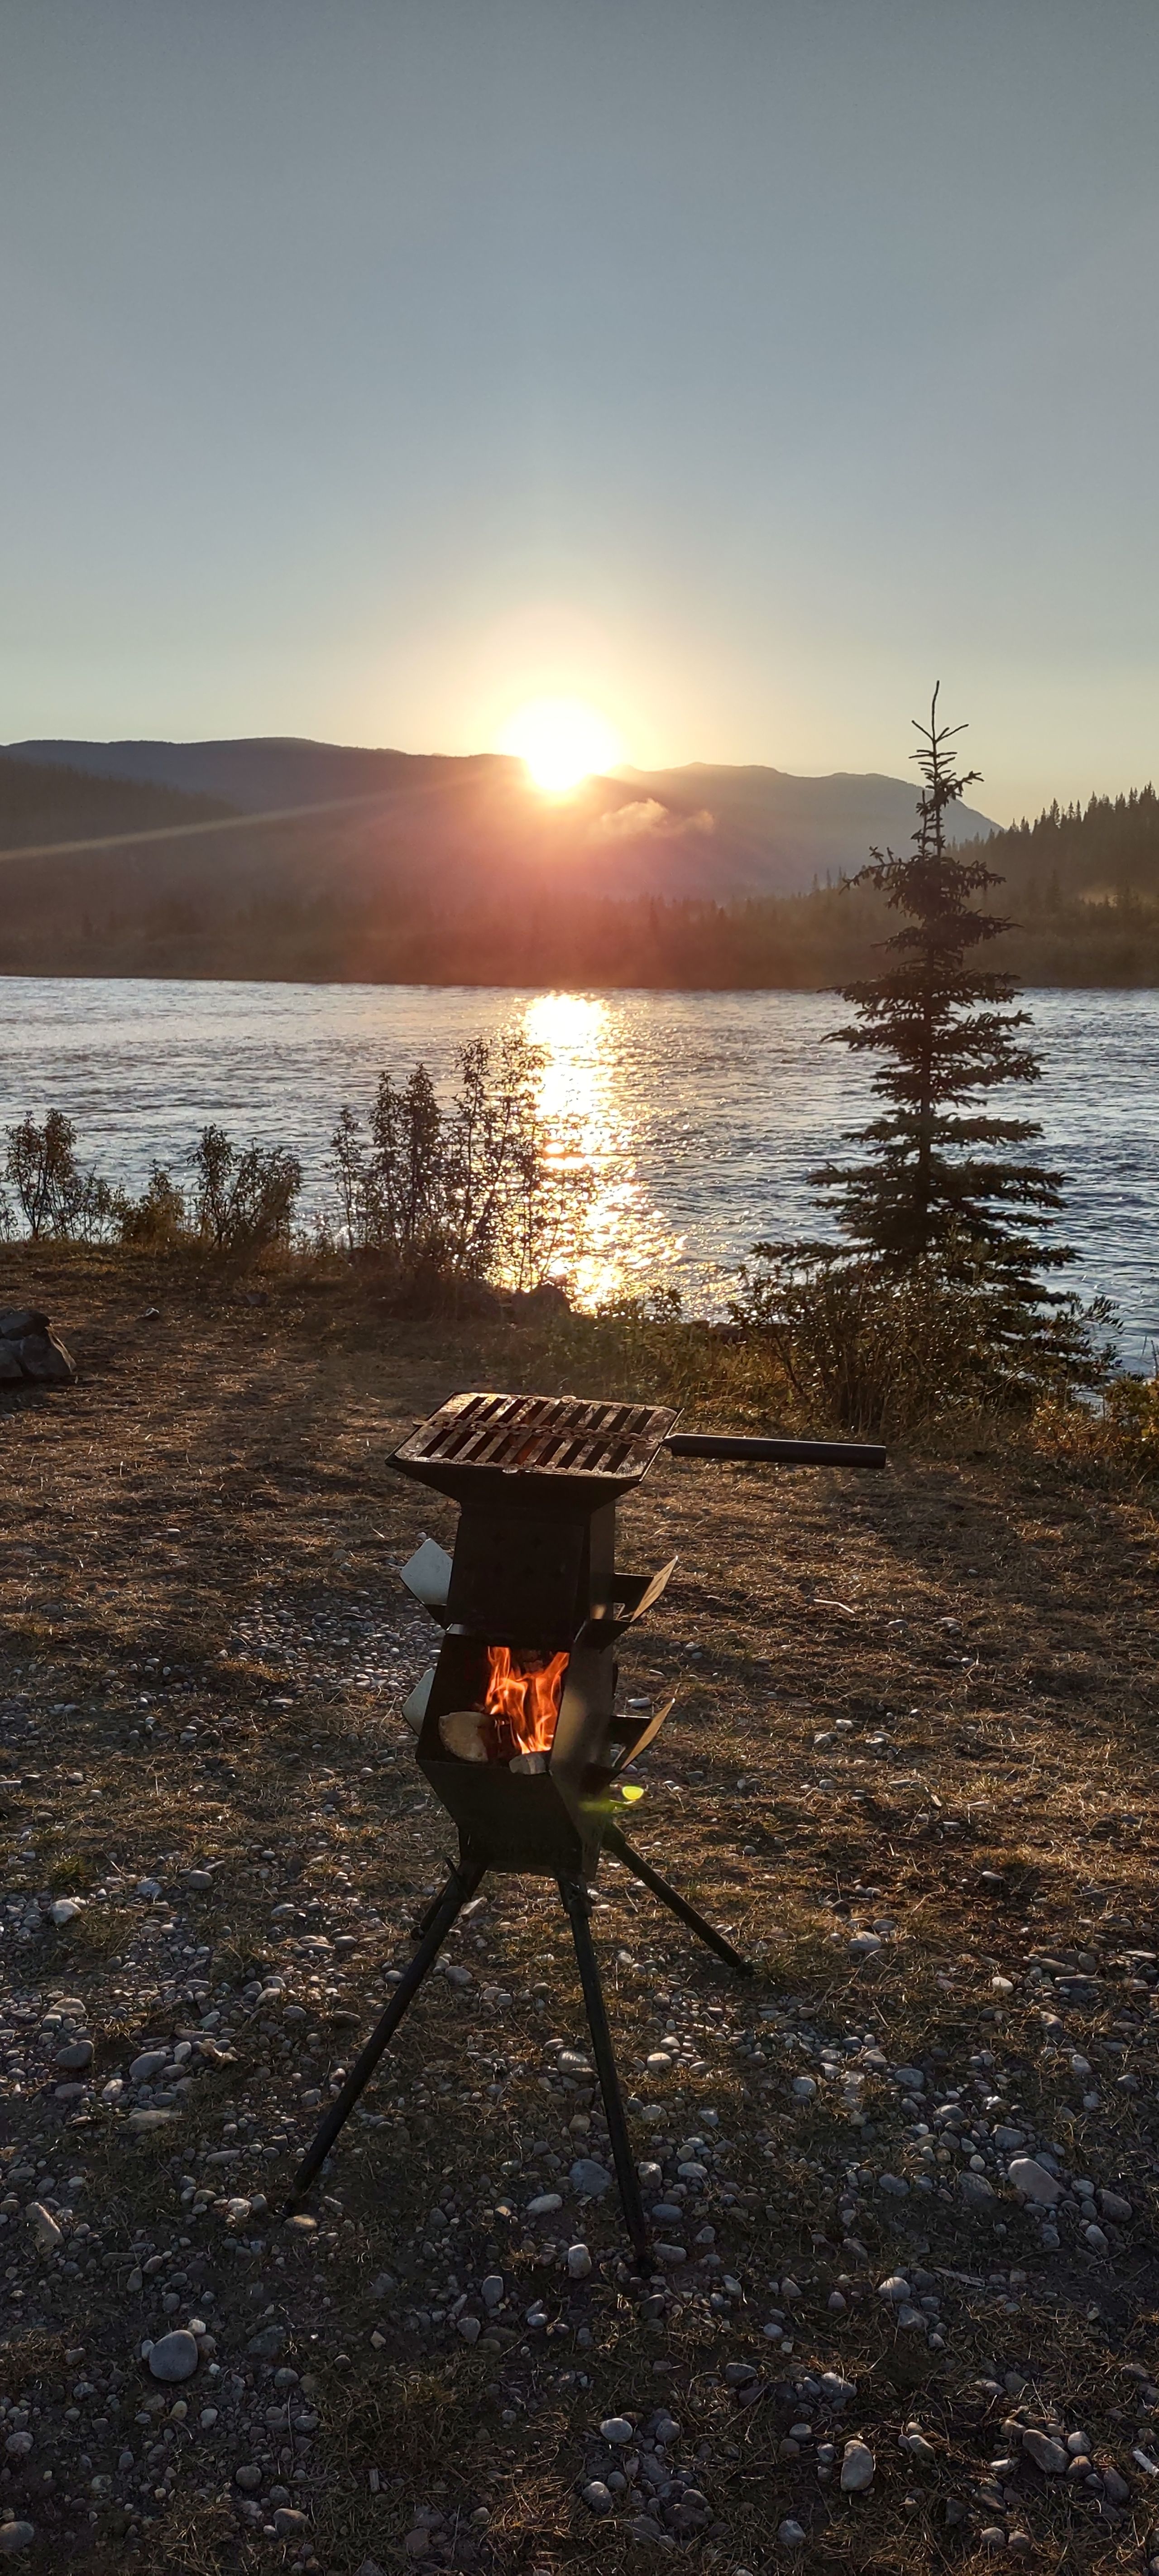 rocket stove against a sunrise backdrop